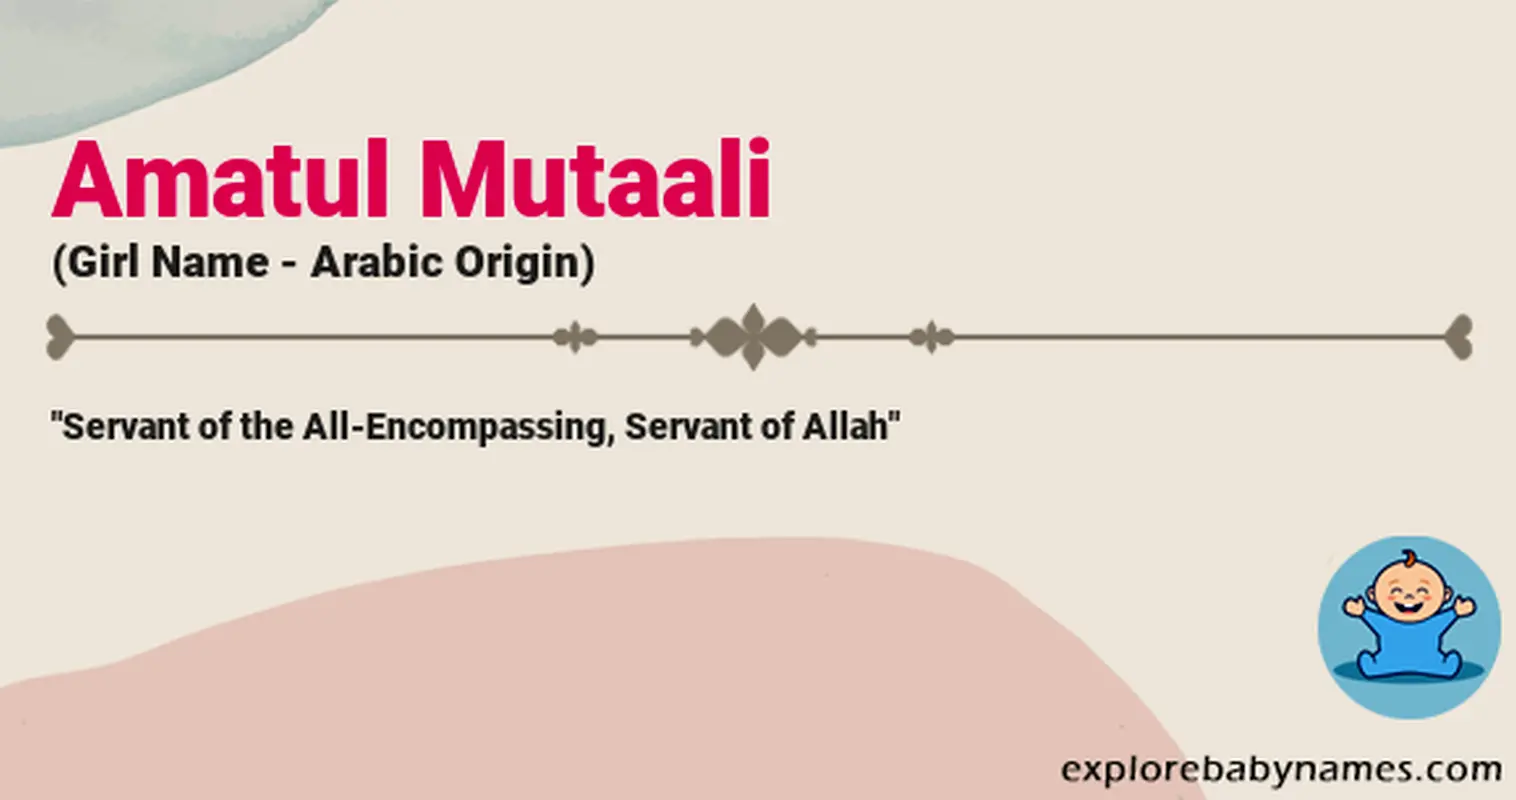 Meaning of Amatul Mutaali